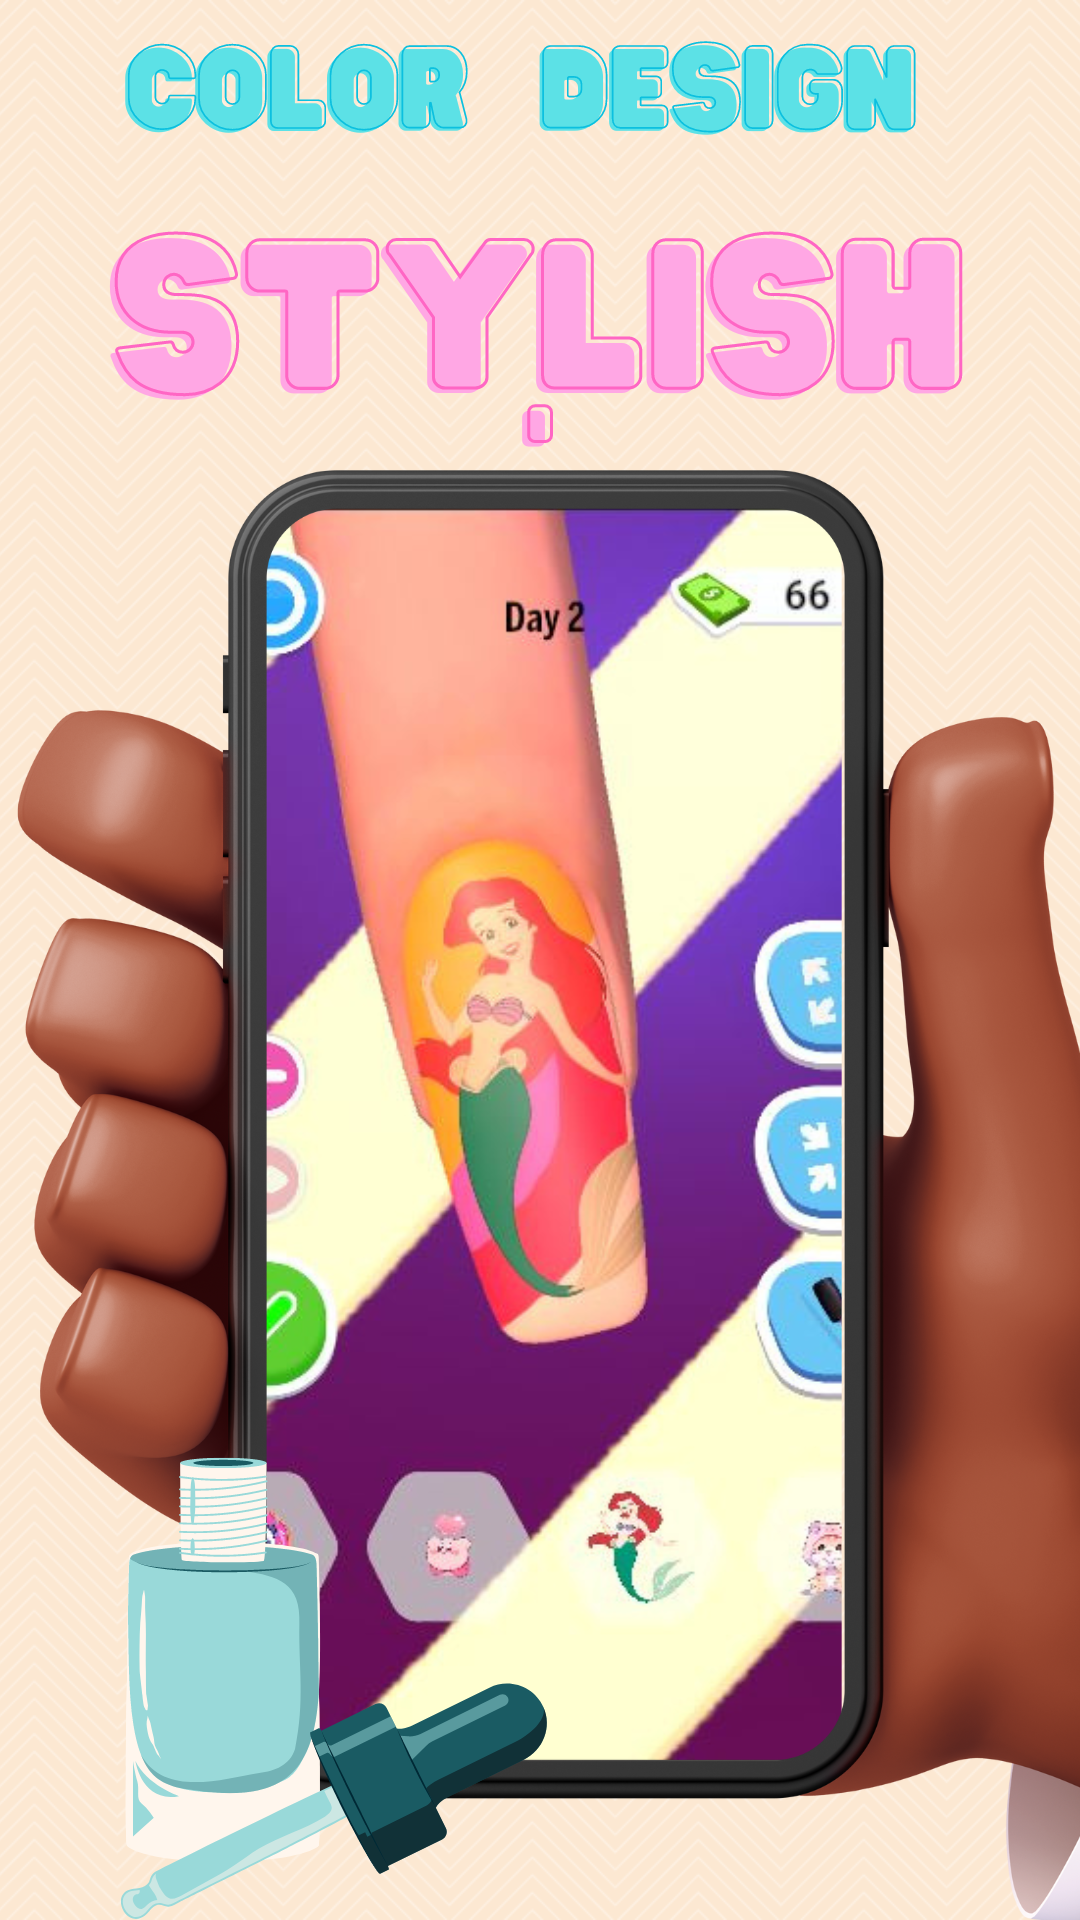 Nail Art: Nail Salon Games for iPhone - Free App Download